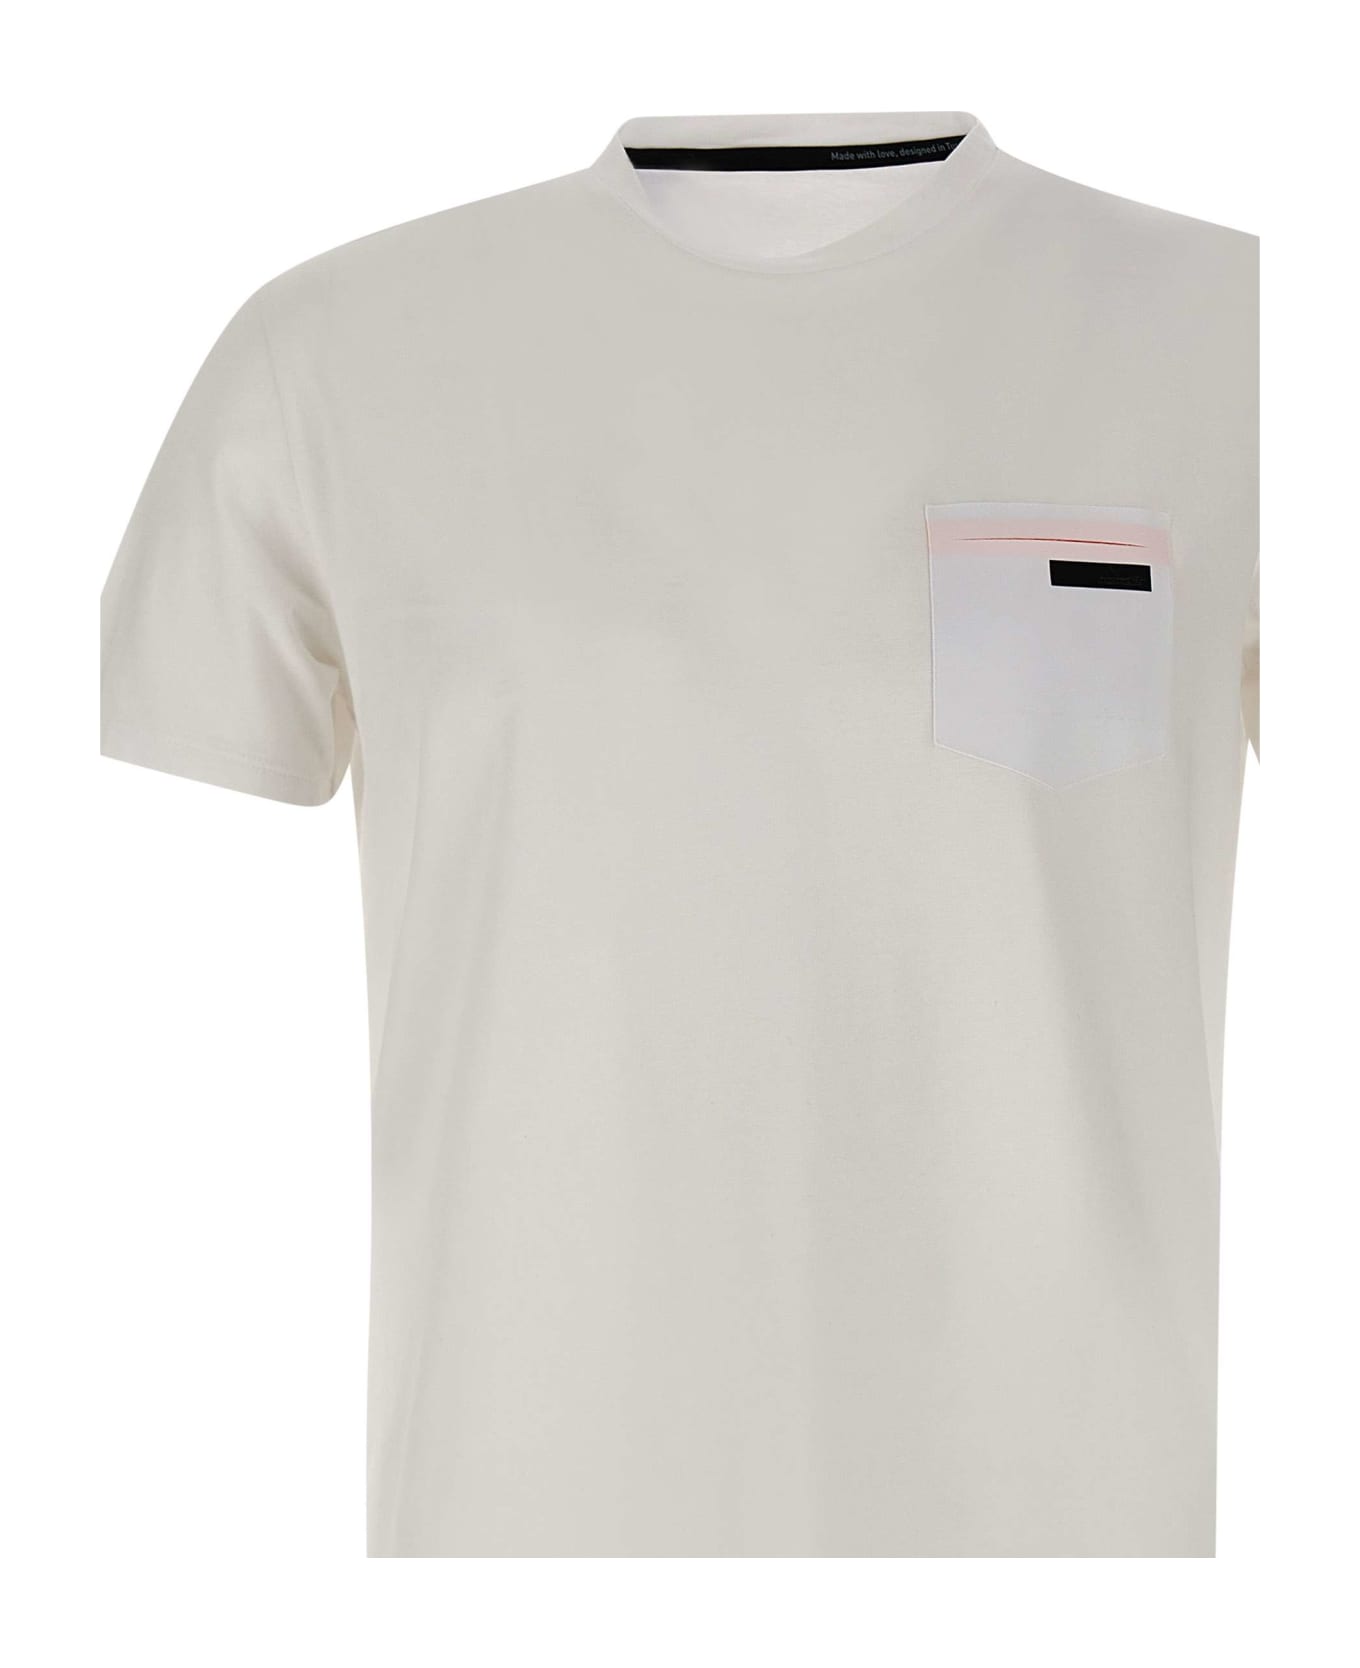 RRD - Roberto Ricci Design "revo Shirty" T-shirt - WHITE